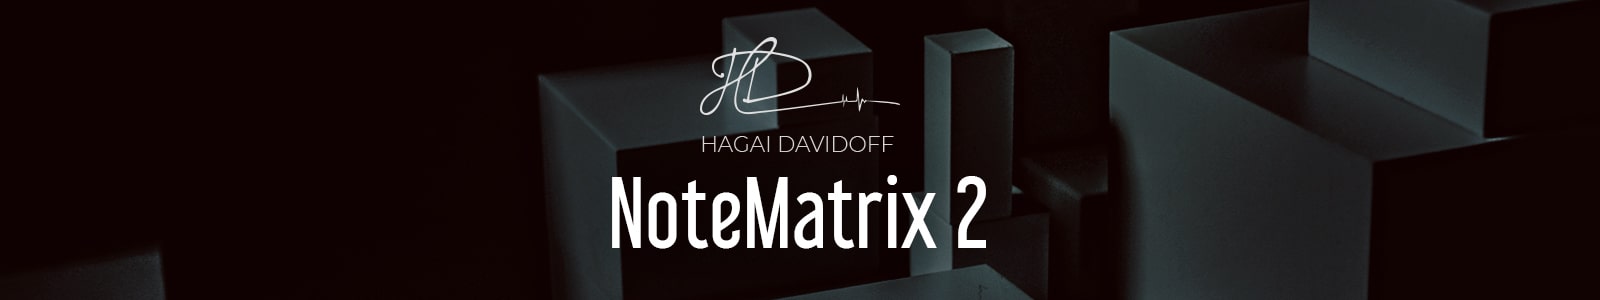 NoteMatrix 2 by HD Instruments